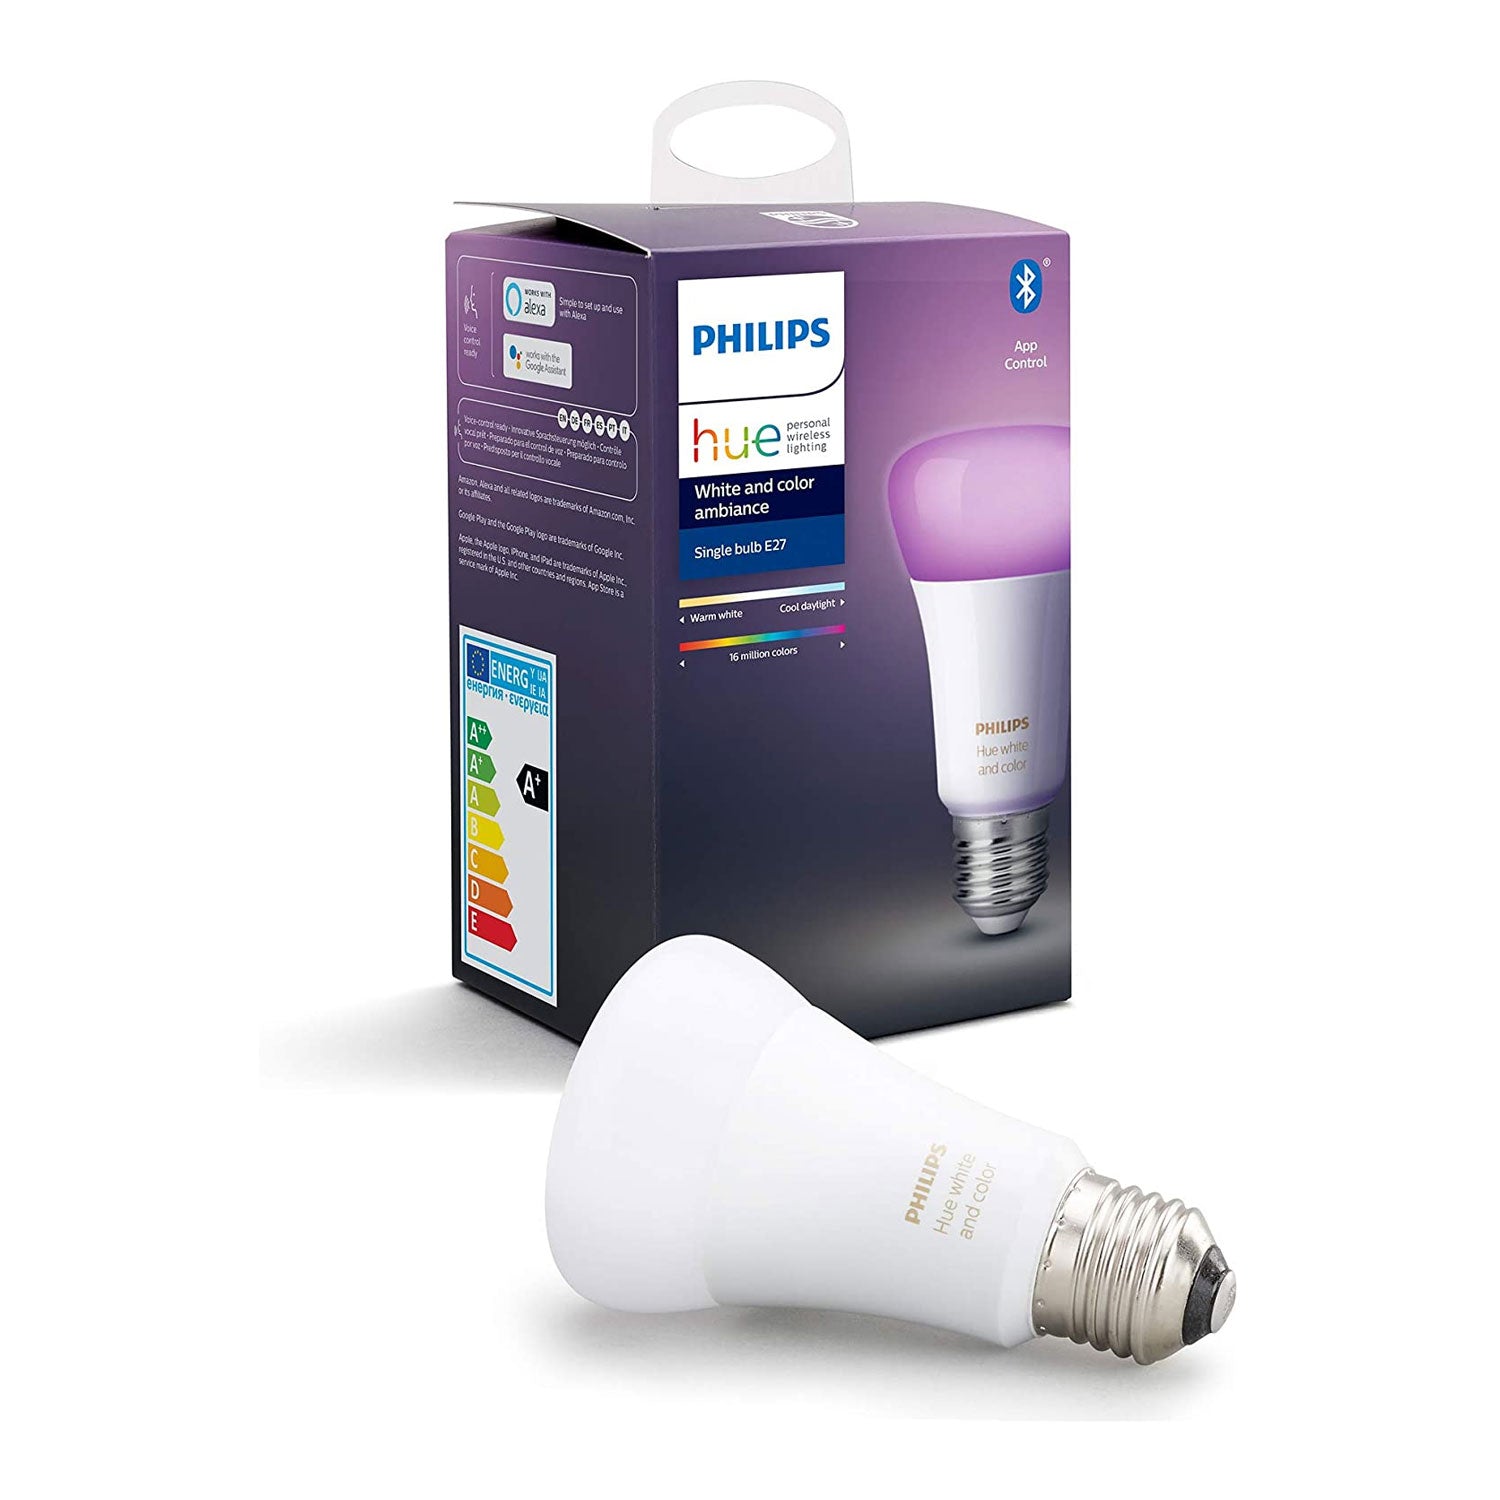 4 x 10w LED Bulbs, E27 Screw - Daylight/Cool White